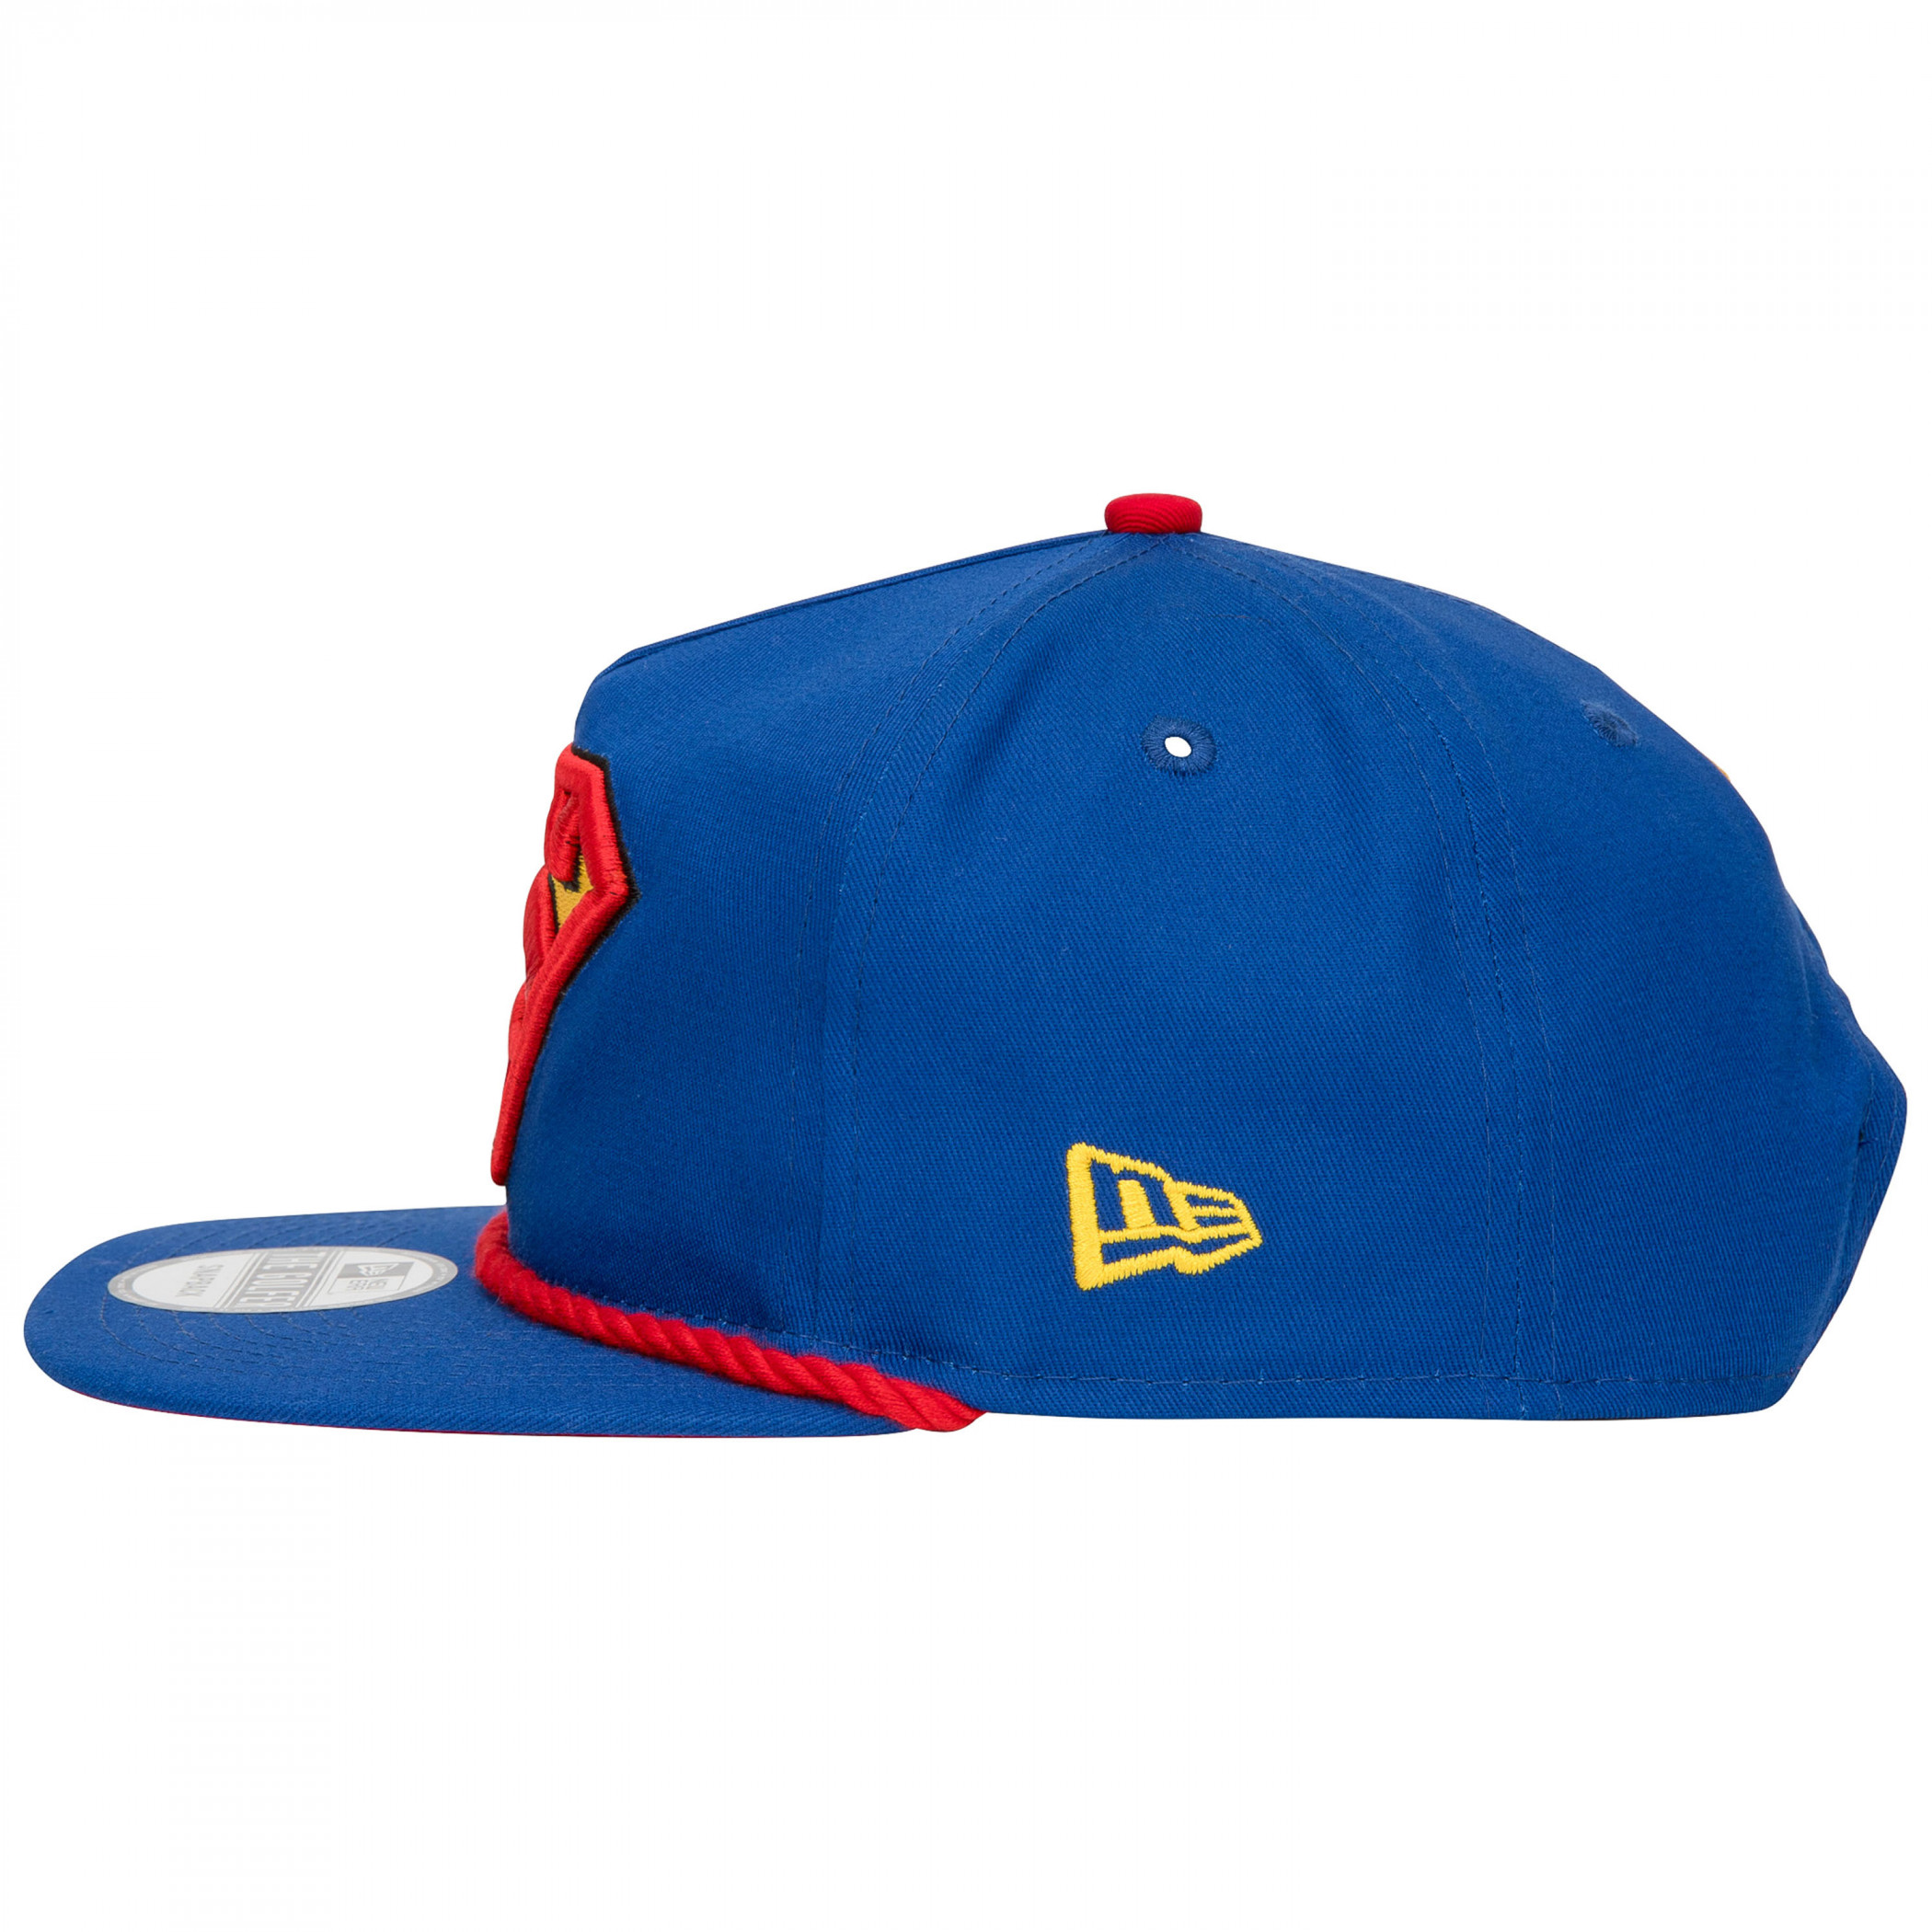 Superman Logo Blue Colorway New Era Adjustable Golfer Rope Hat